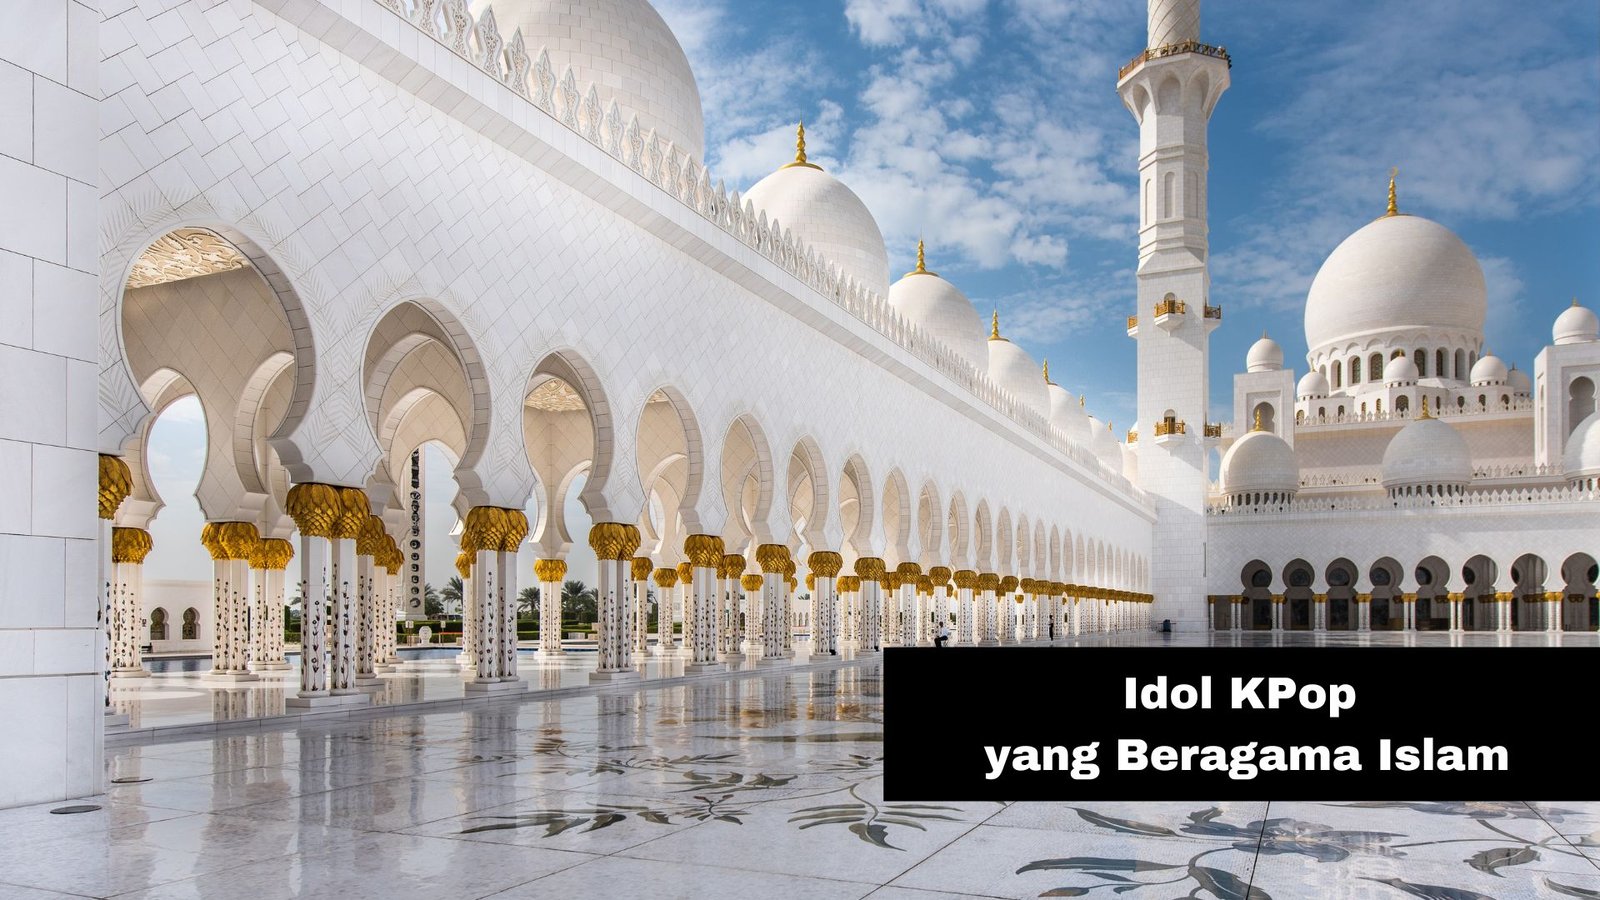 Idol Kpop Yang Beragama Islam